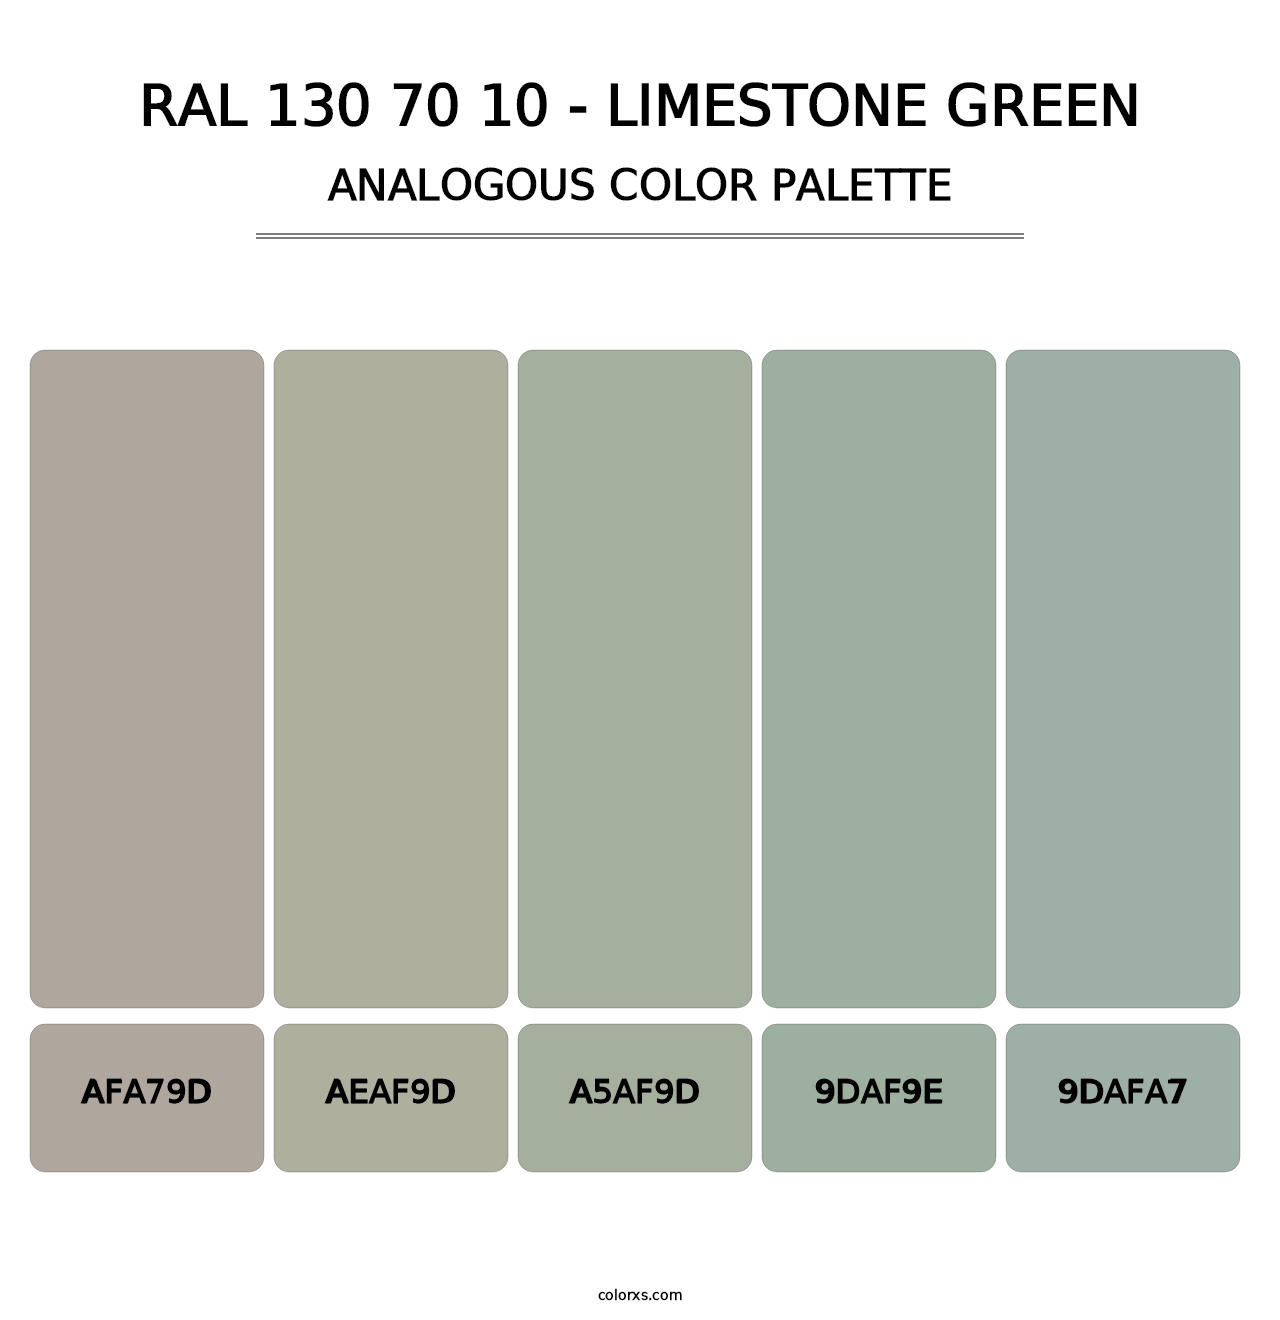 RAL 130 70 10 - Limestone Green - Analogous Color Palette